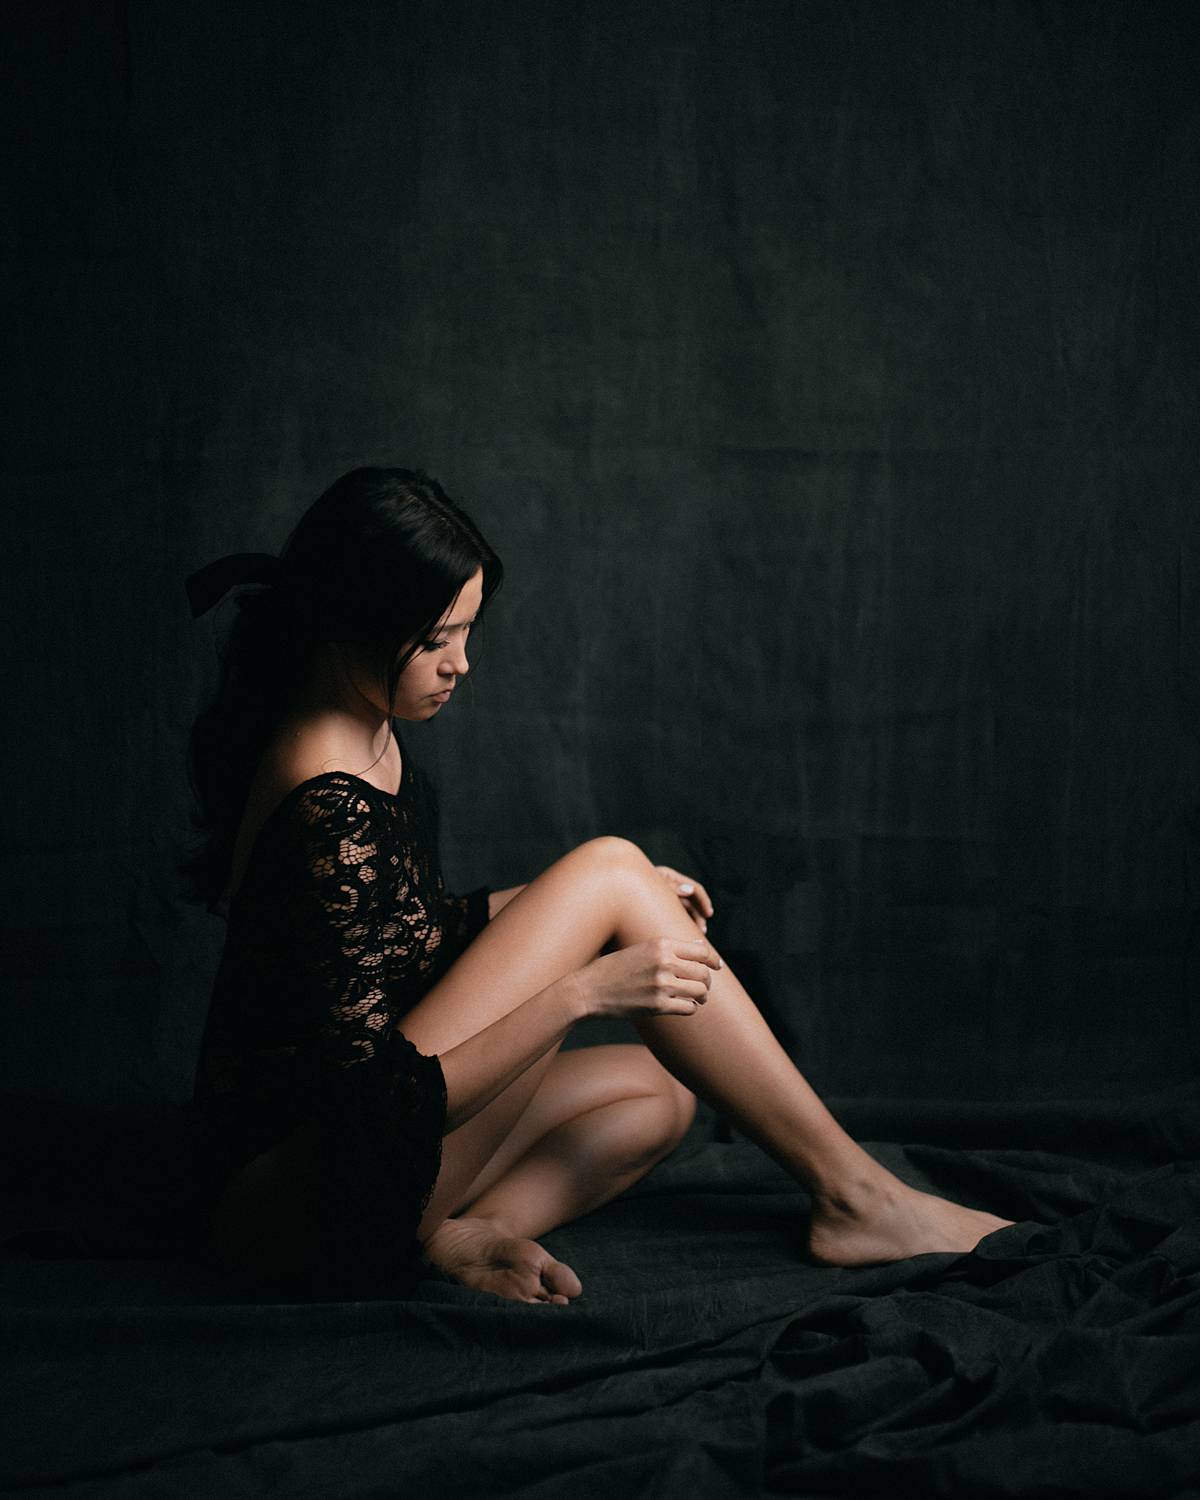 charleston studio boudoir portrait dark backdrop with soft window light and girl in black lace bodysuit